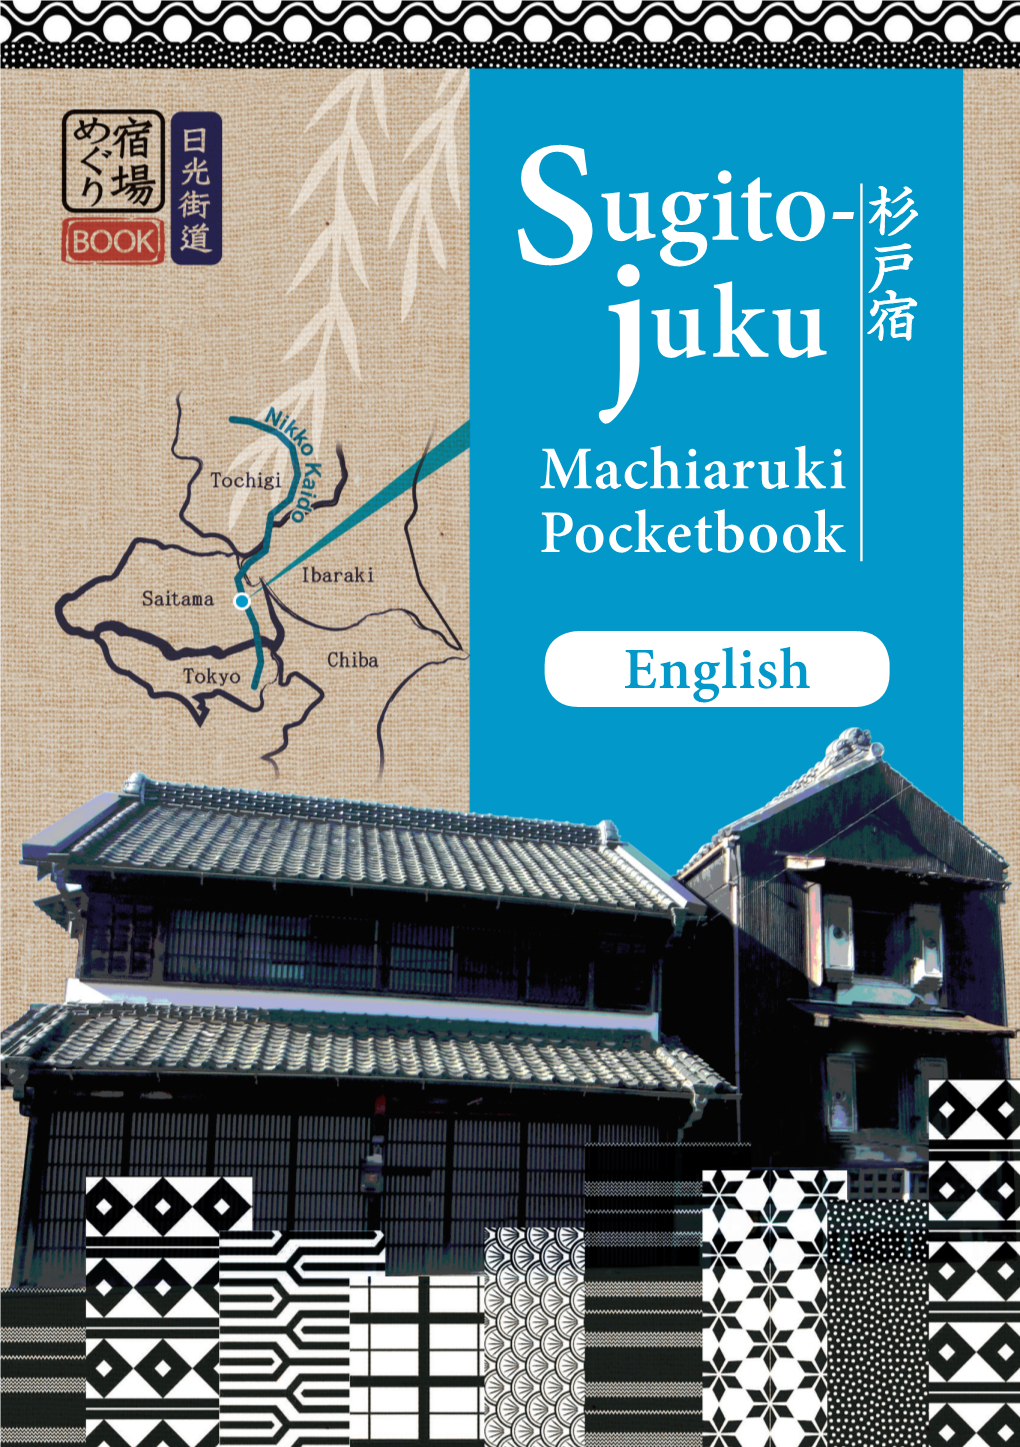 Sugito- Juku Machiaruki Pocketbook